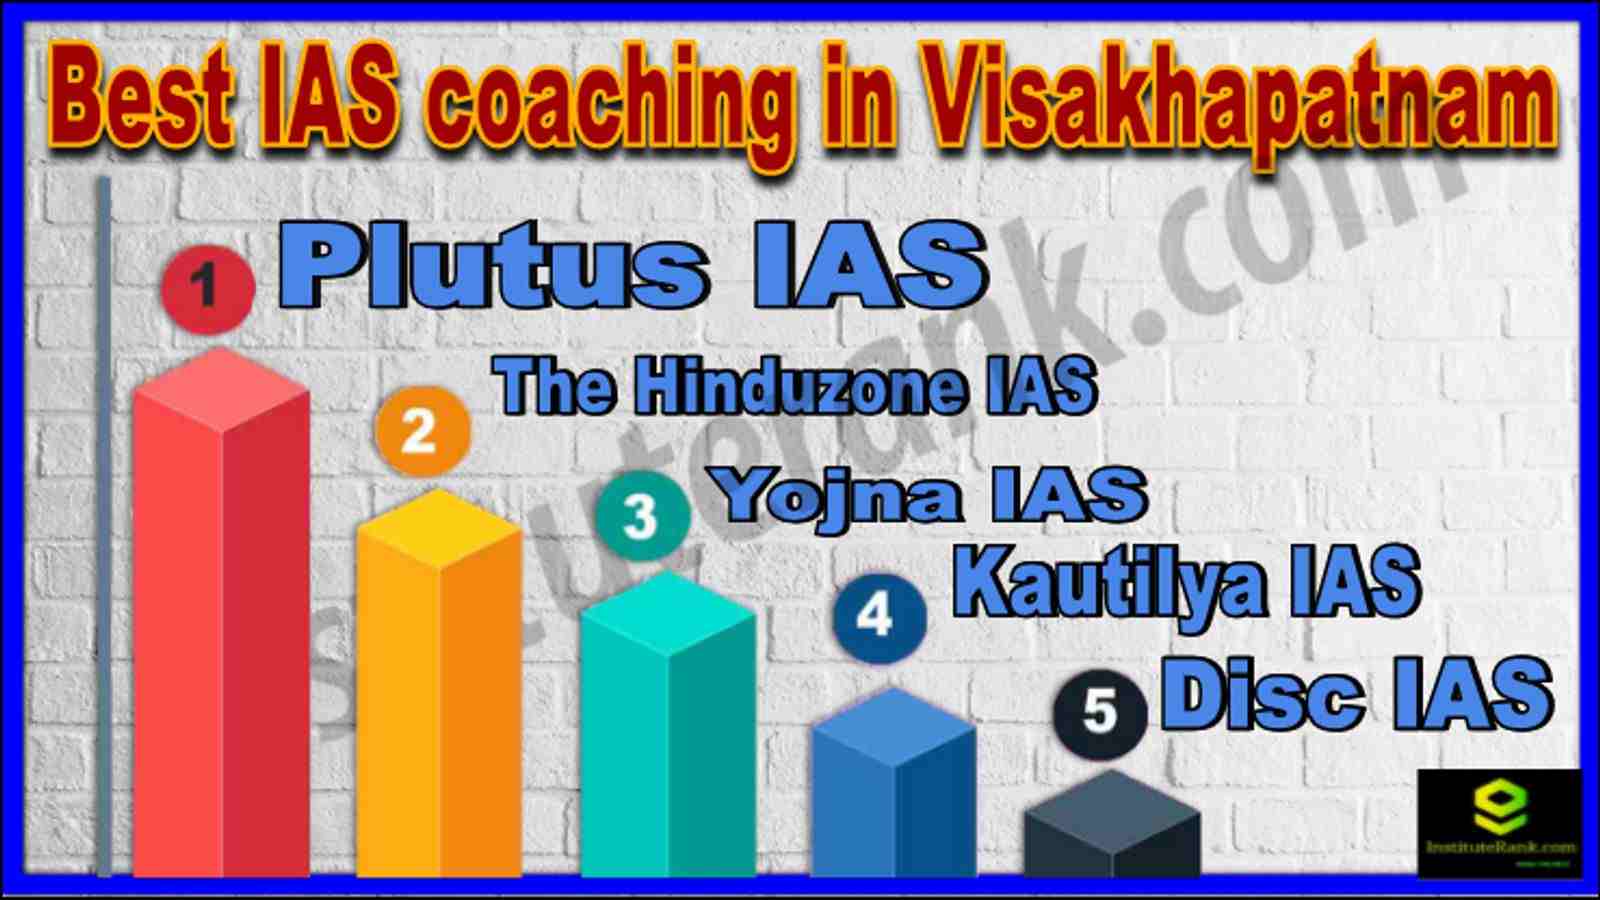 Best IAS coaching in Visakhapatnam